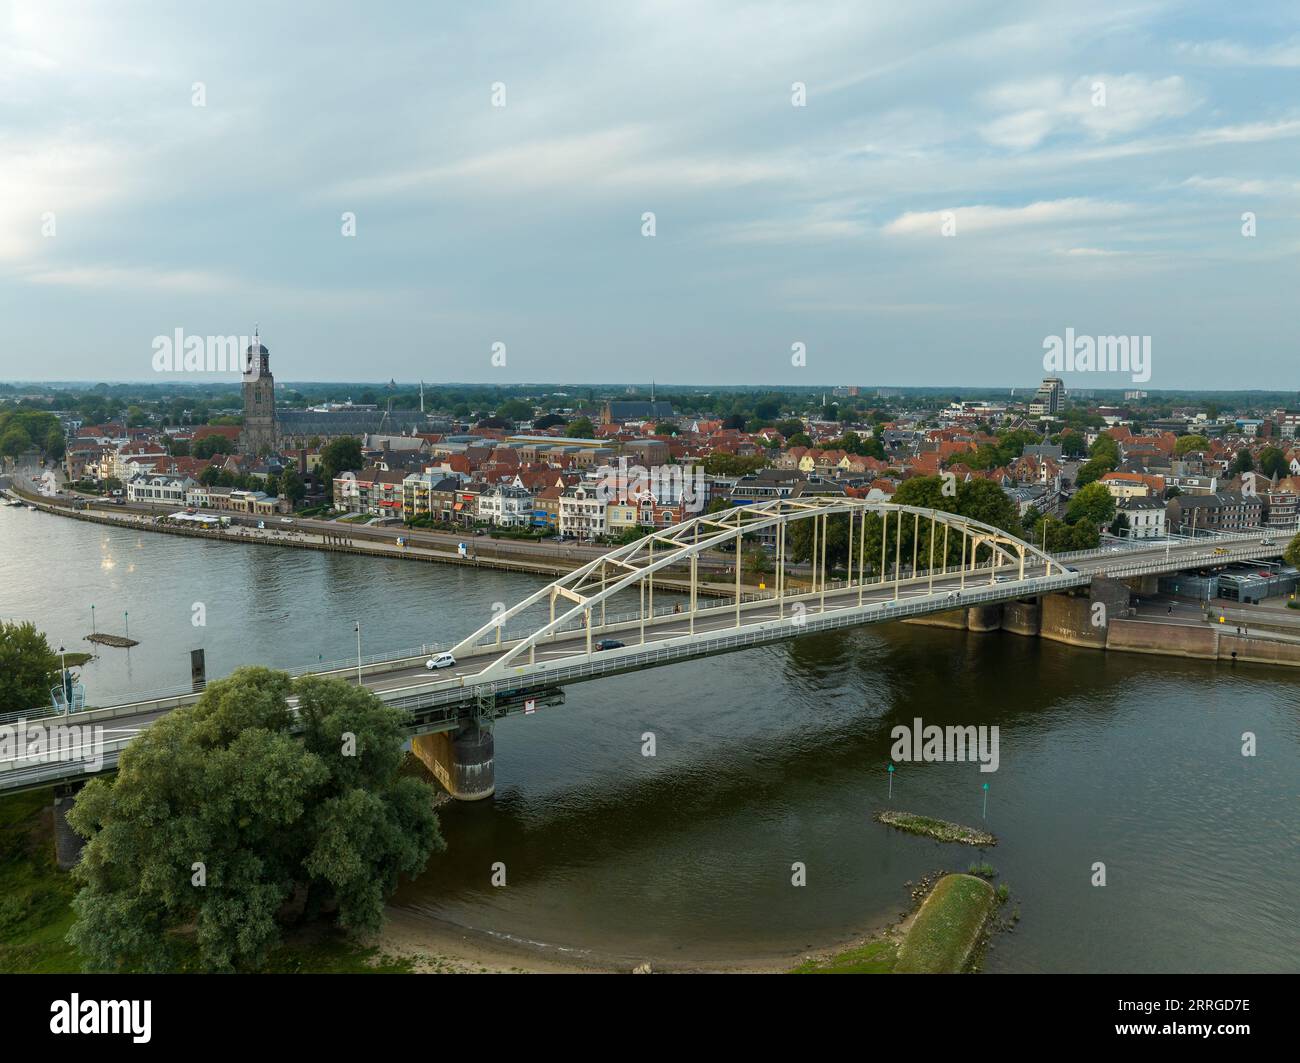 Wilhelmina bridge in Deventer, named after the former queen of the netherlands, crossing the Ijssel river. Stock Photo